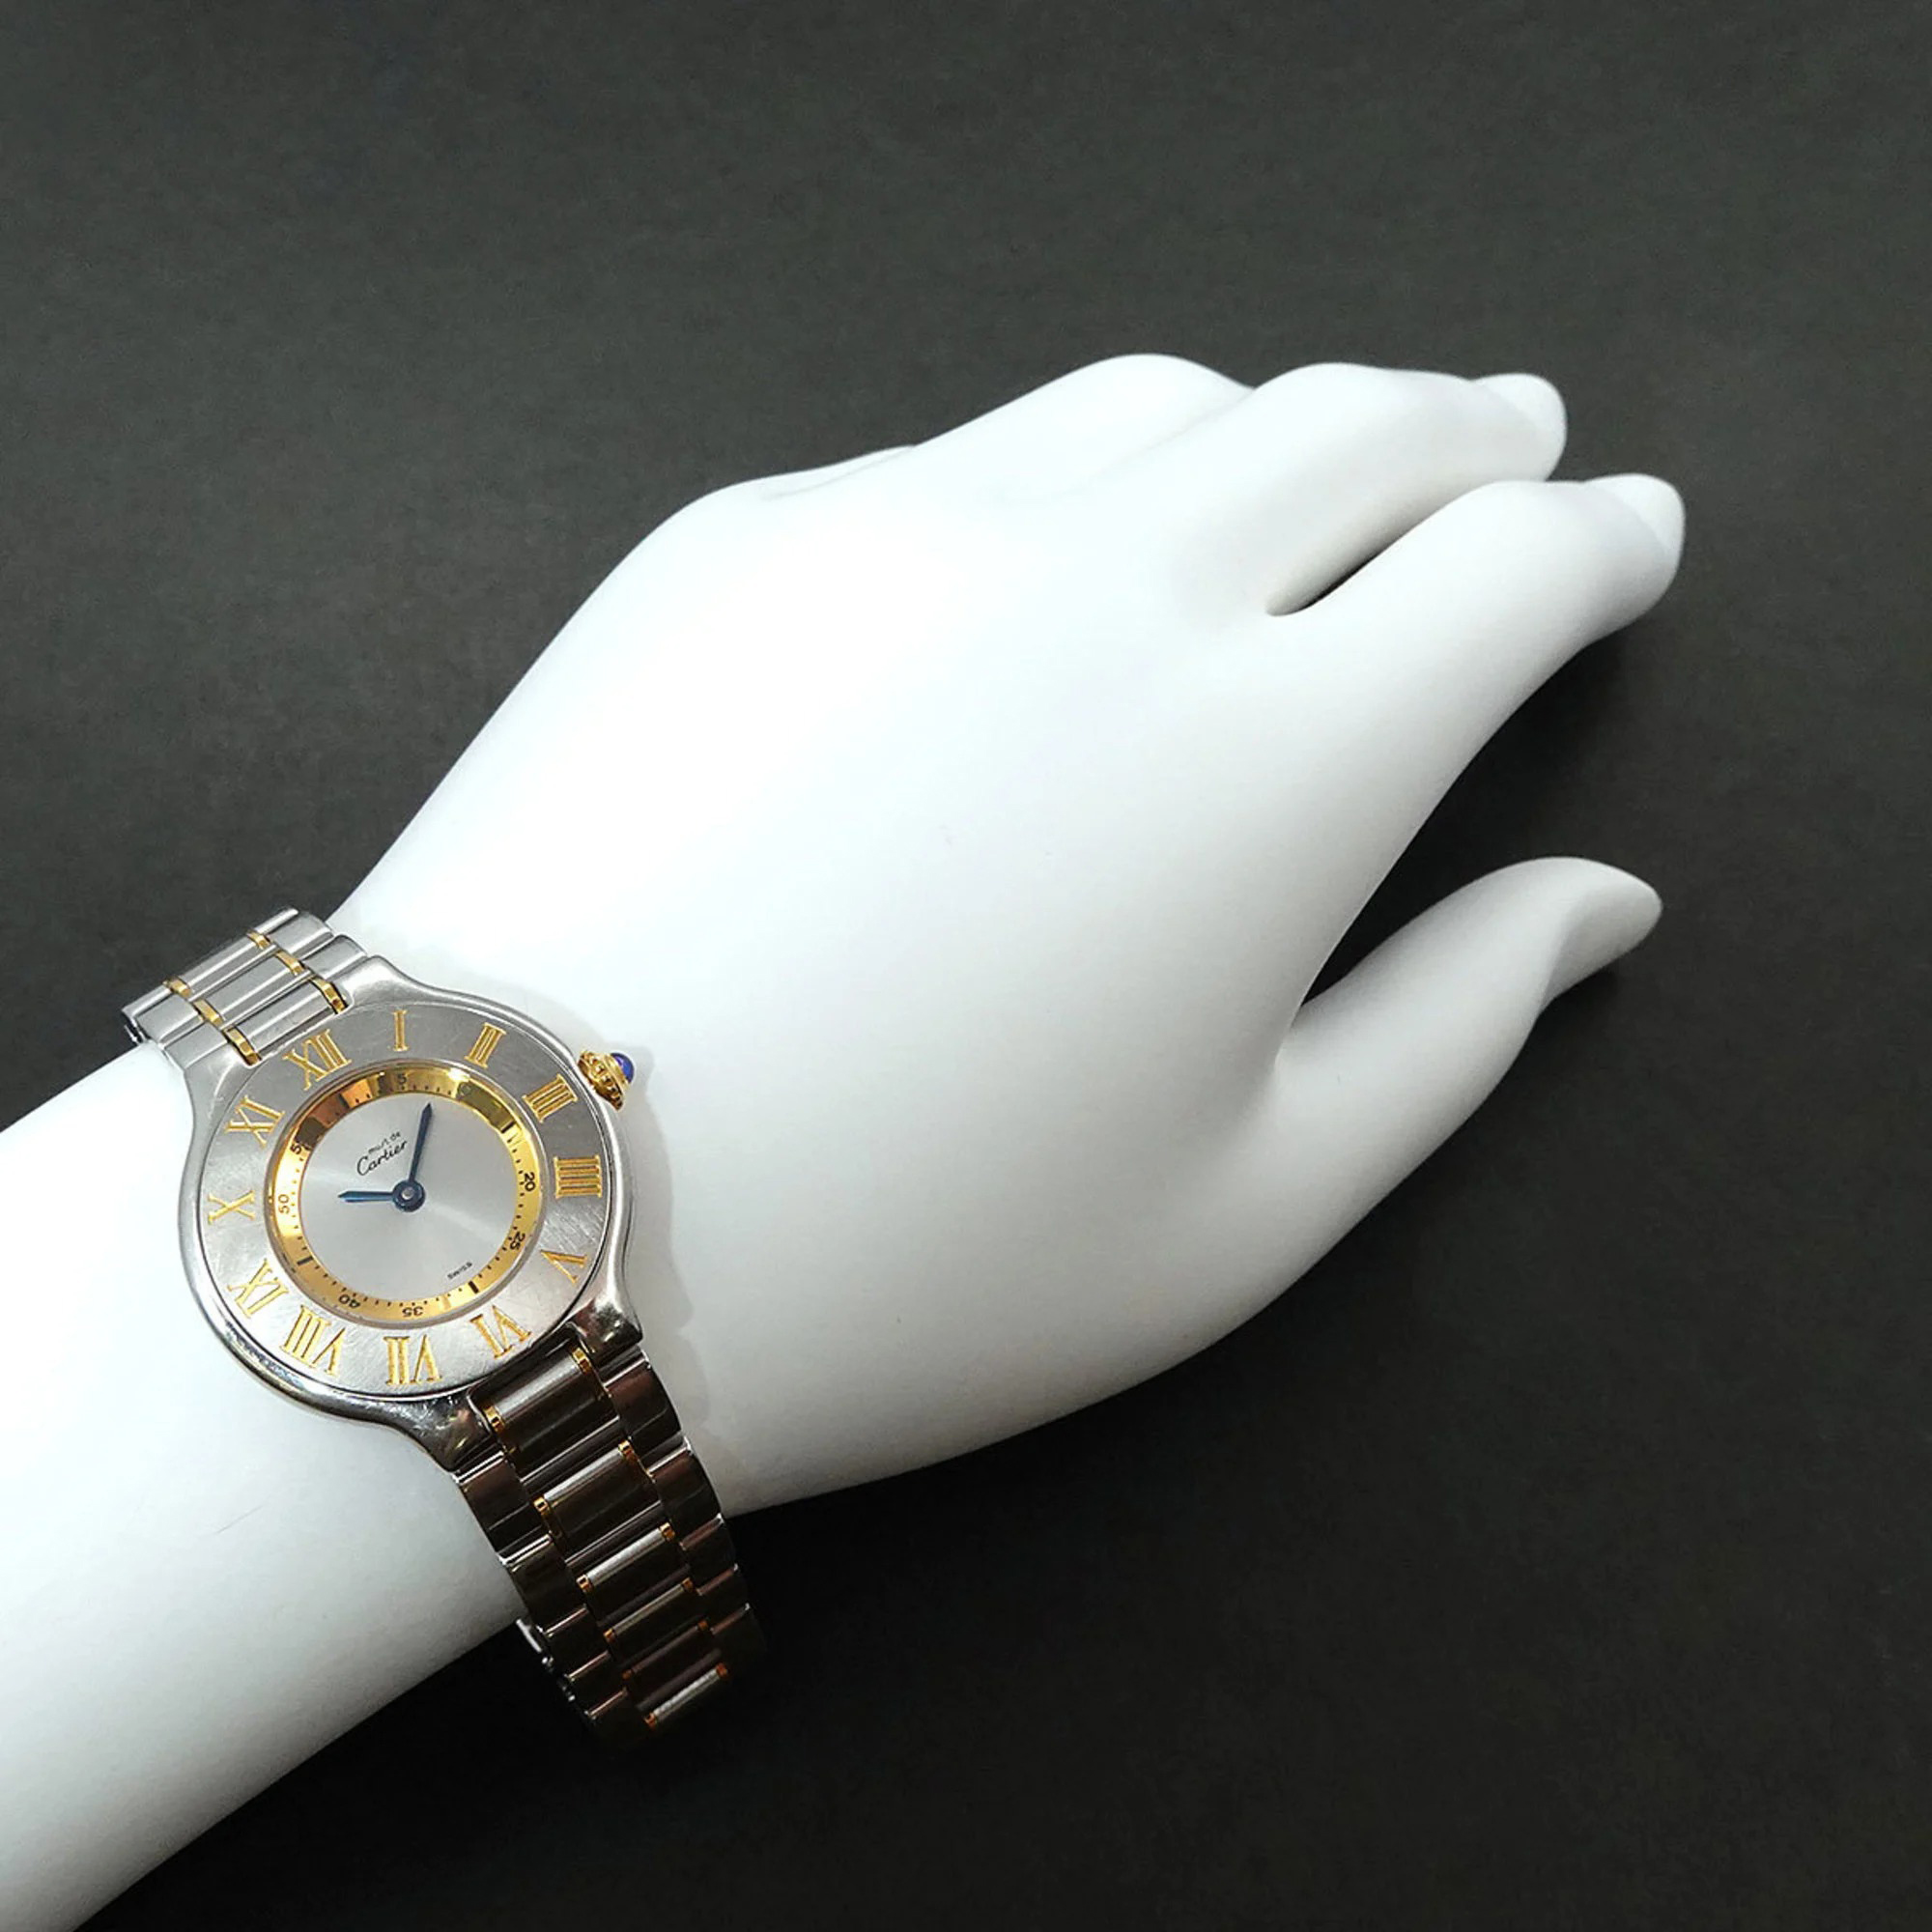 Cartier Silver Stainless Steel Must 21 De Cartier W10073R6 Women's Wristwatch 28 Mm